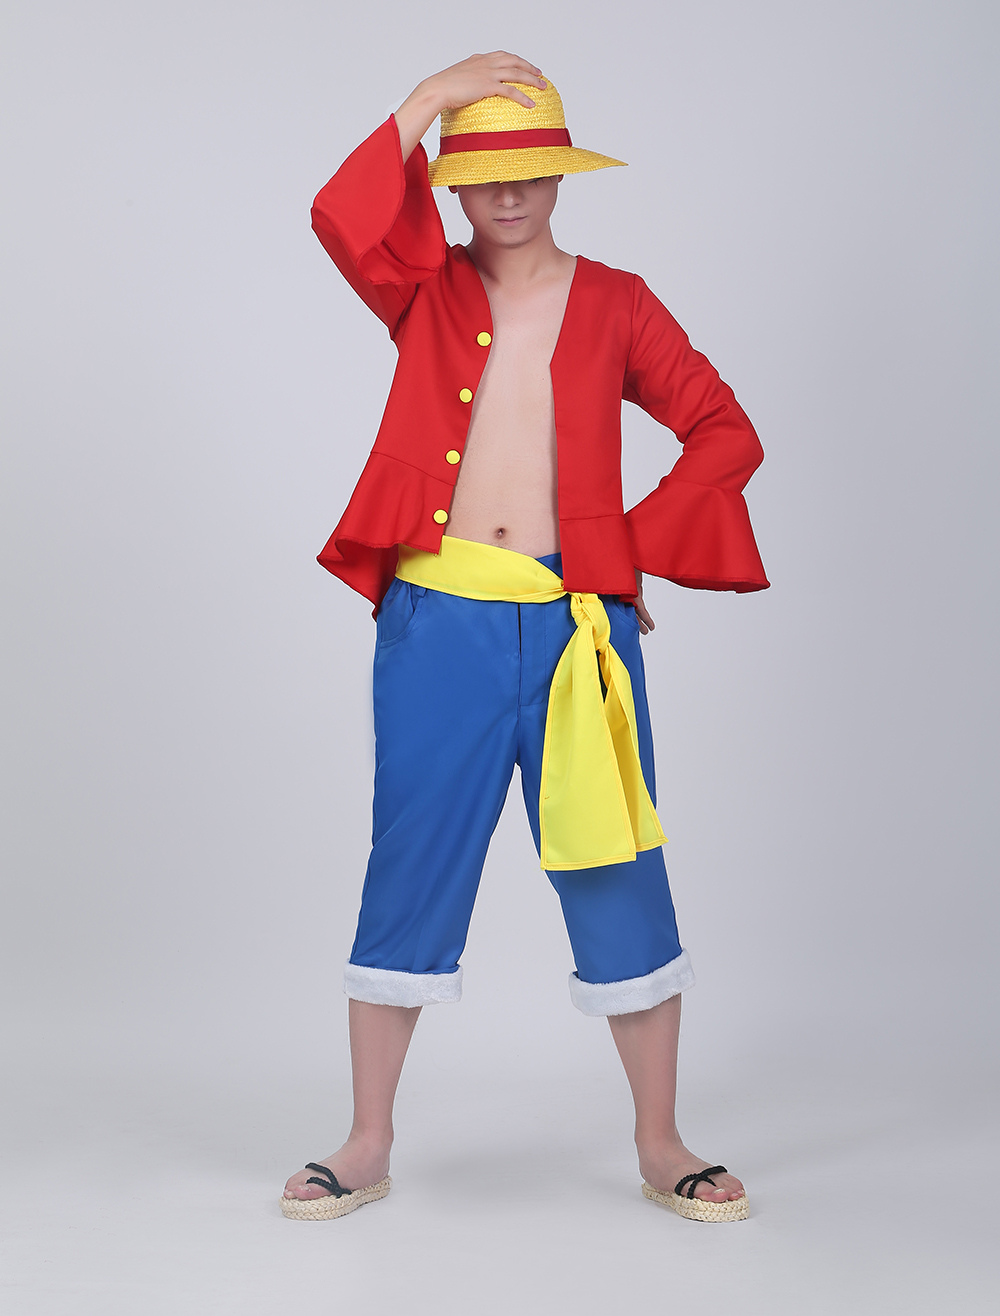 Milanoo Com Buy Cheap One Piece Anime Cosplay Costume Halloween